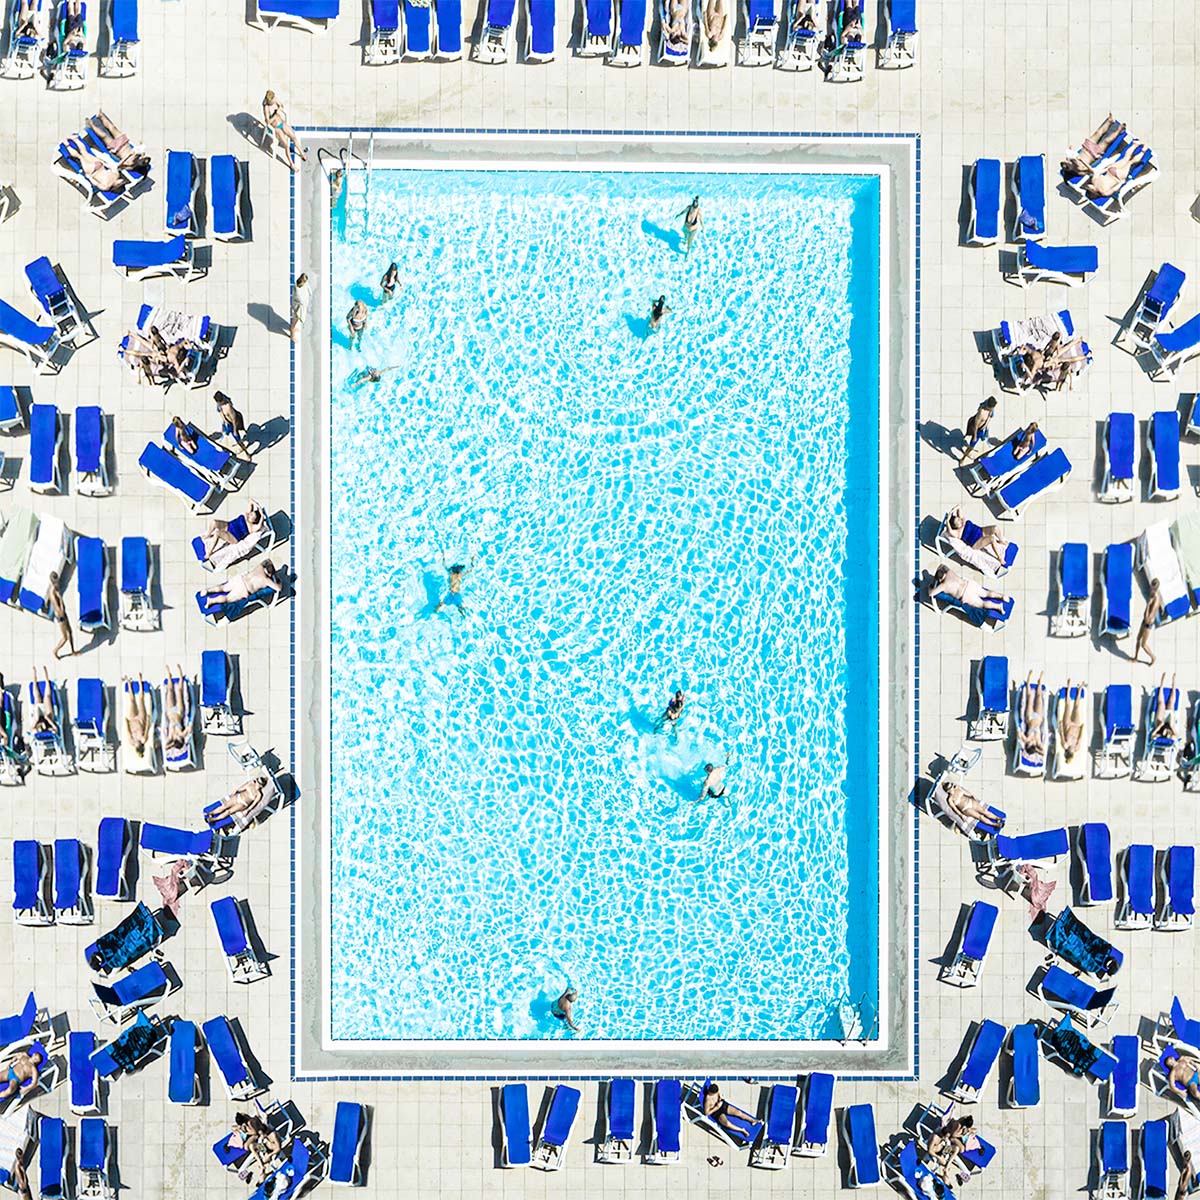 Gysel Fernandini "Swimming Pool, Barcelona 2019" Aerial Photography